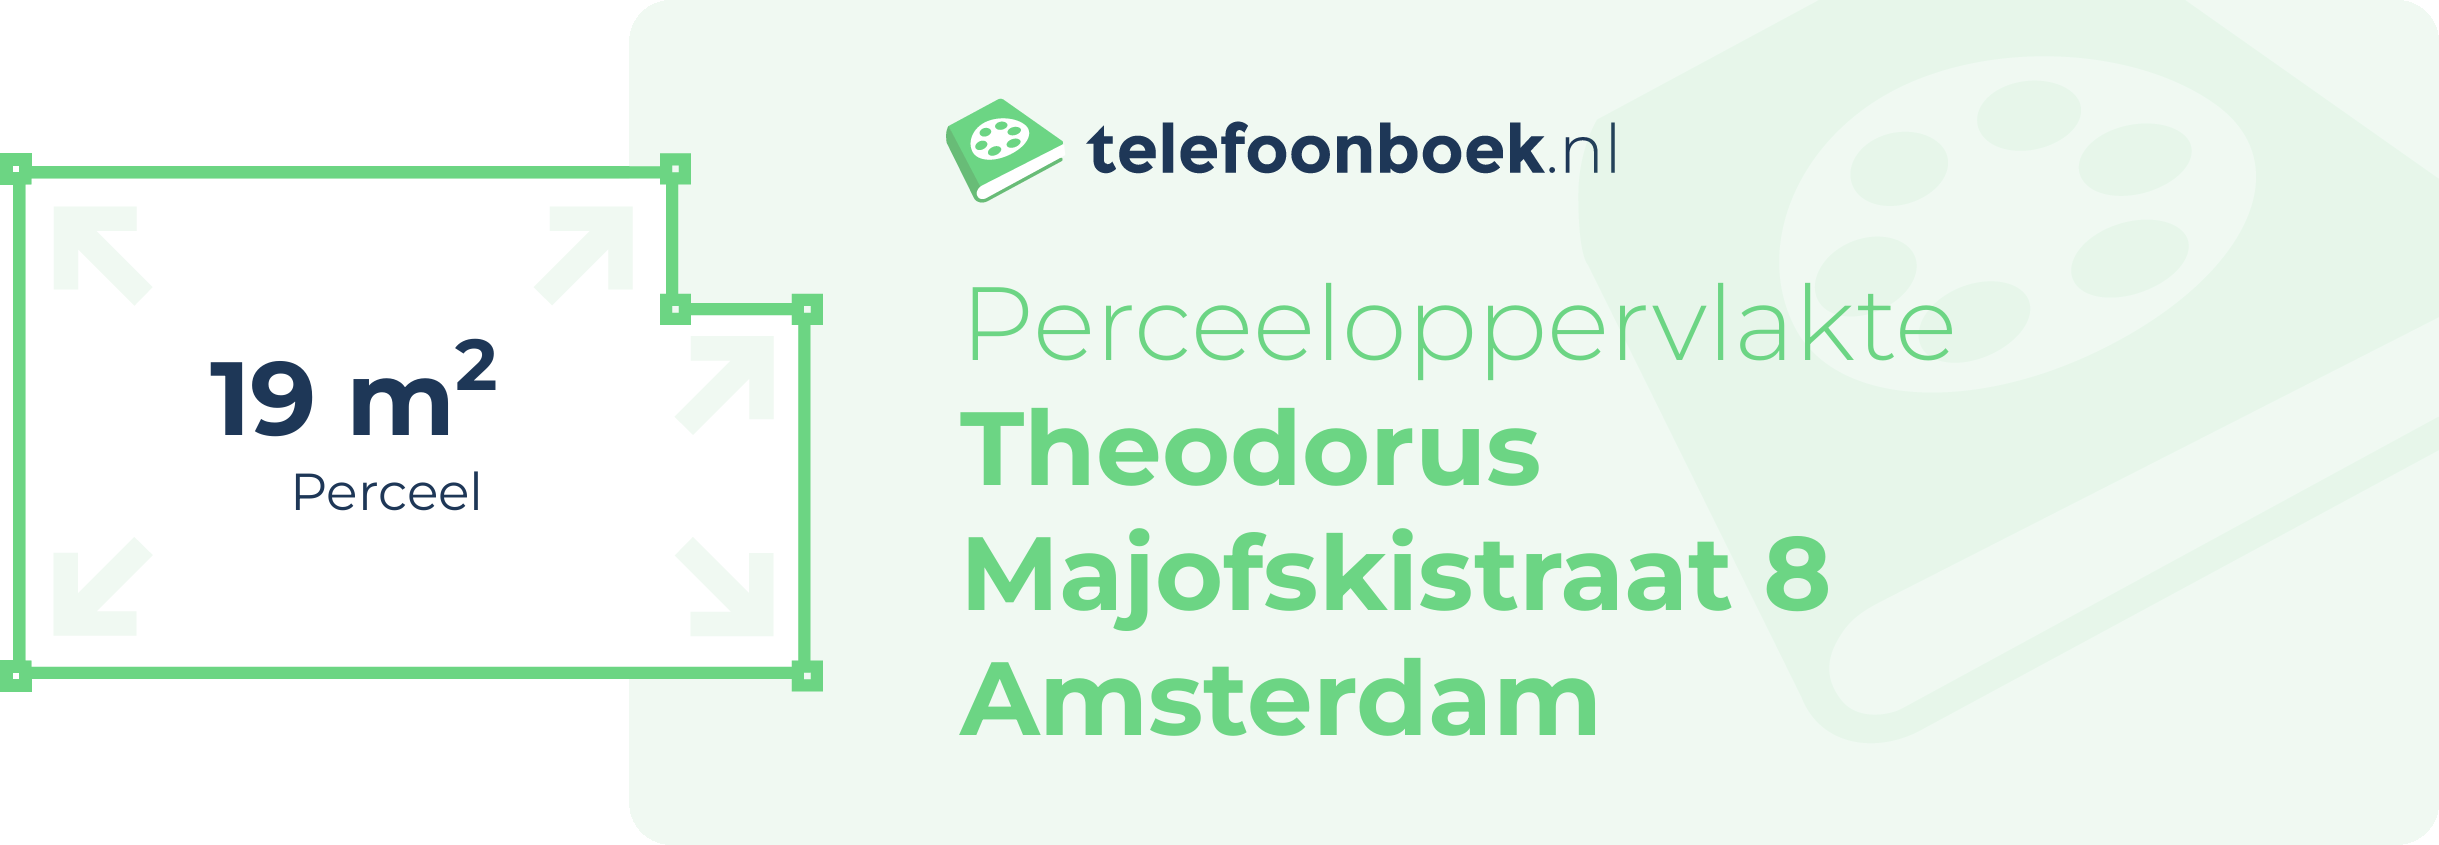 Perceeloppervlakte Theodorus Majofskistraat 8 Amsterdam